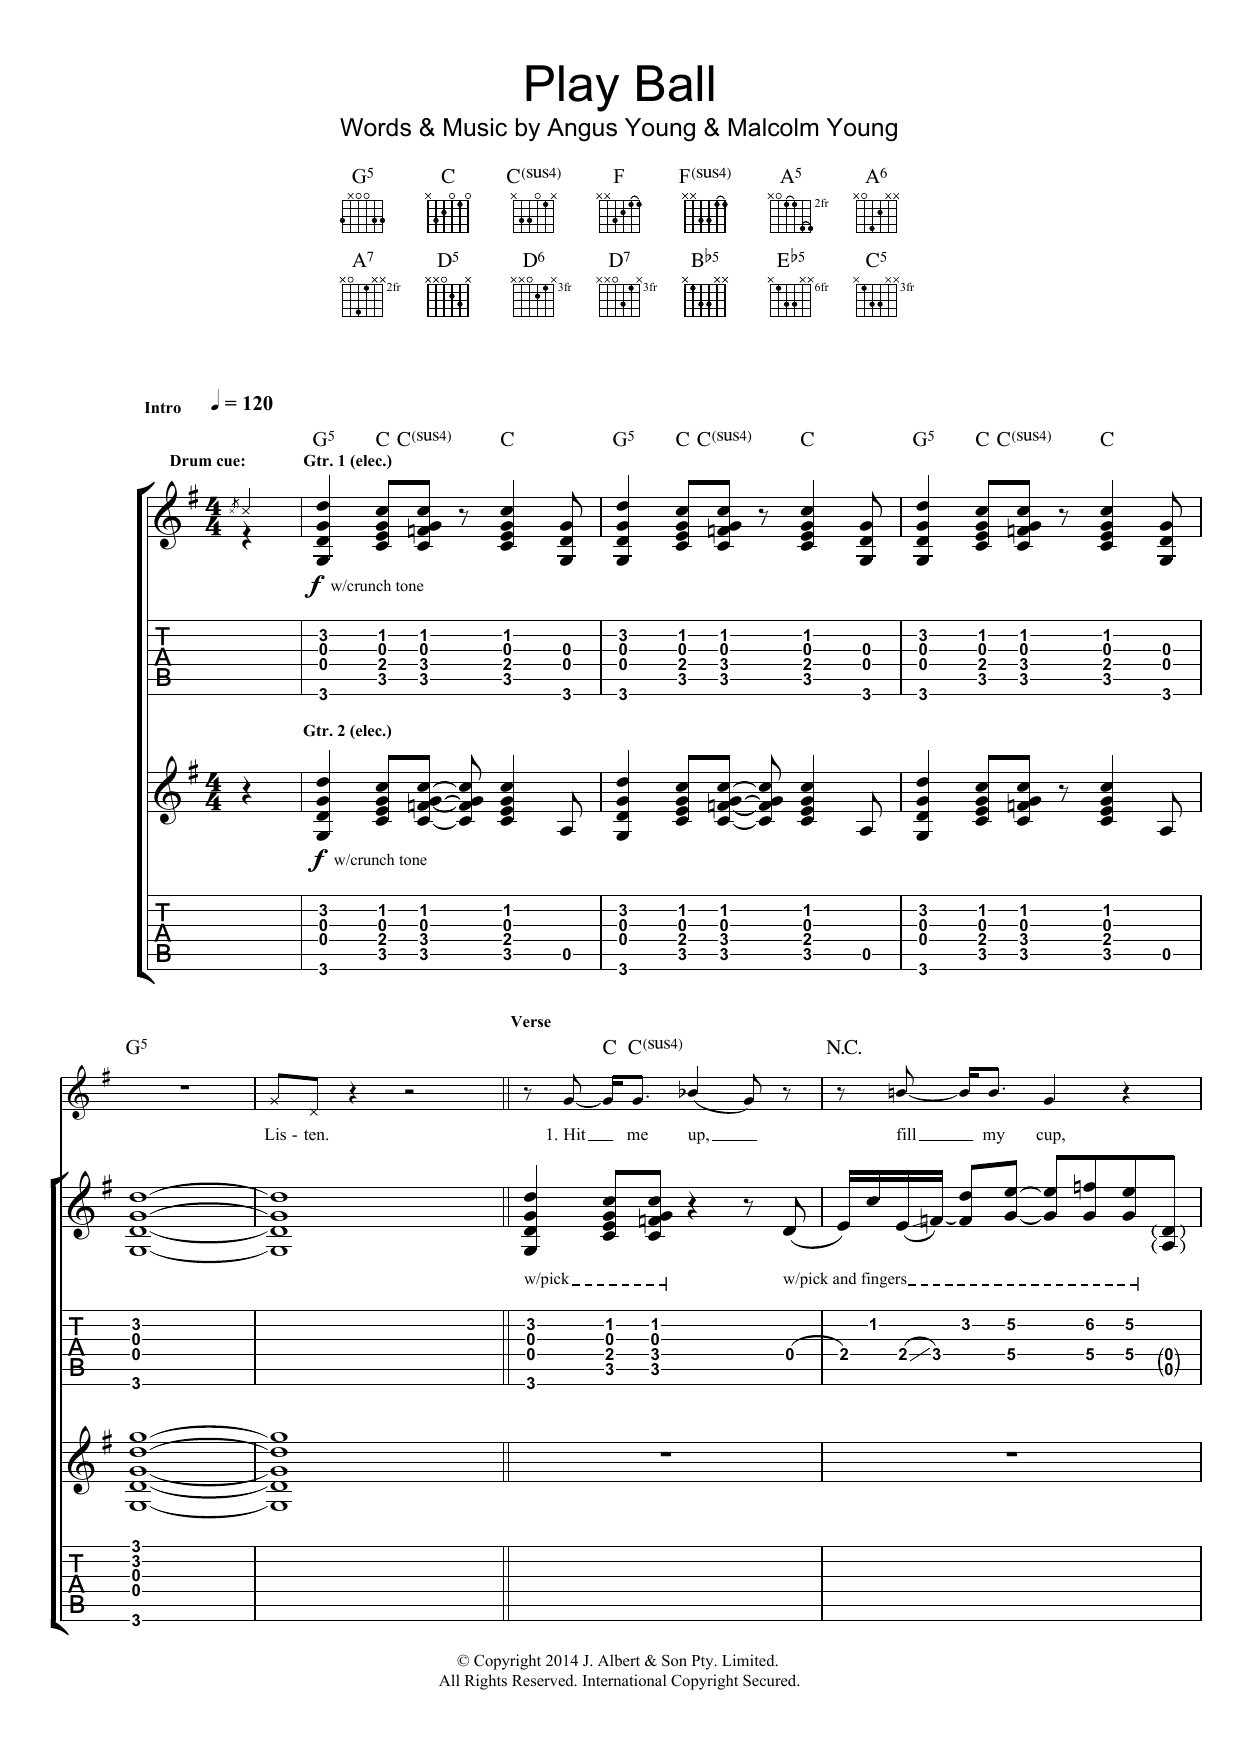 AC\DC Play Ball Sheet Music Notes & Chords for Guitar Chords/Lyrics - Download or Print PDF